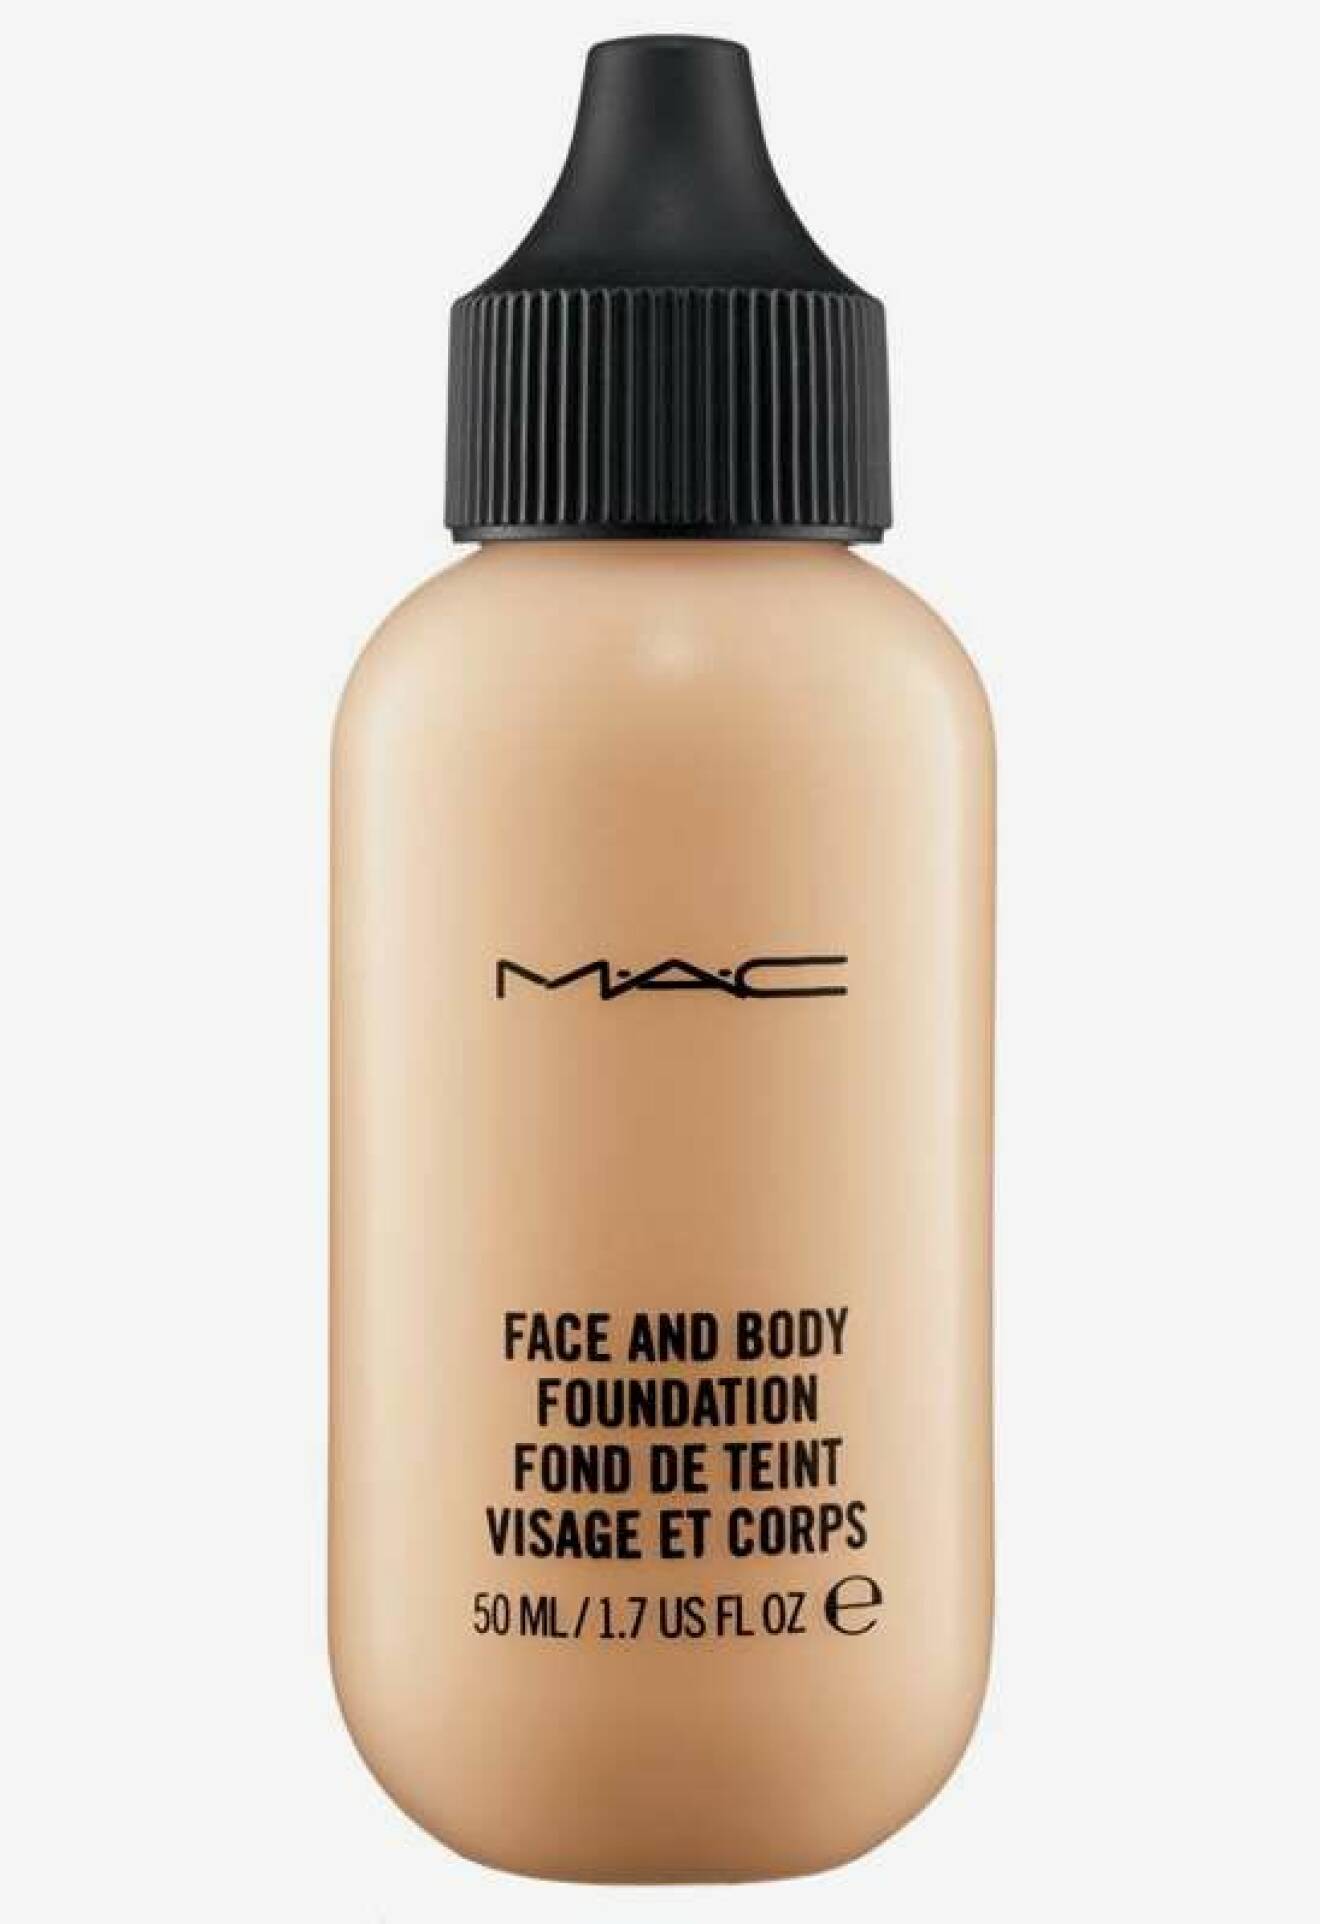 Face and Body foundation från MAC.